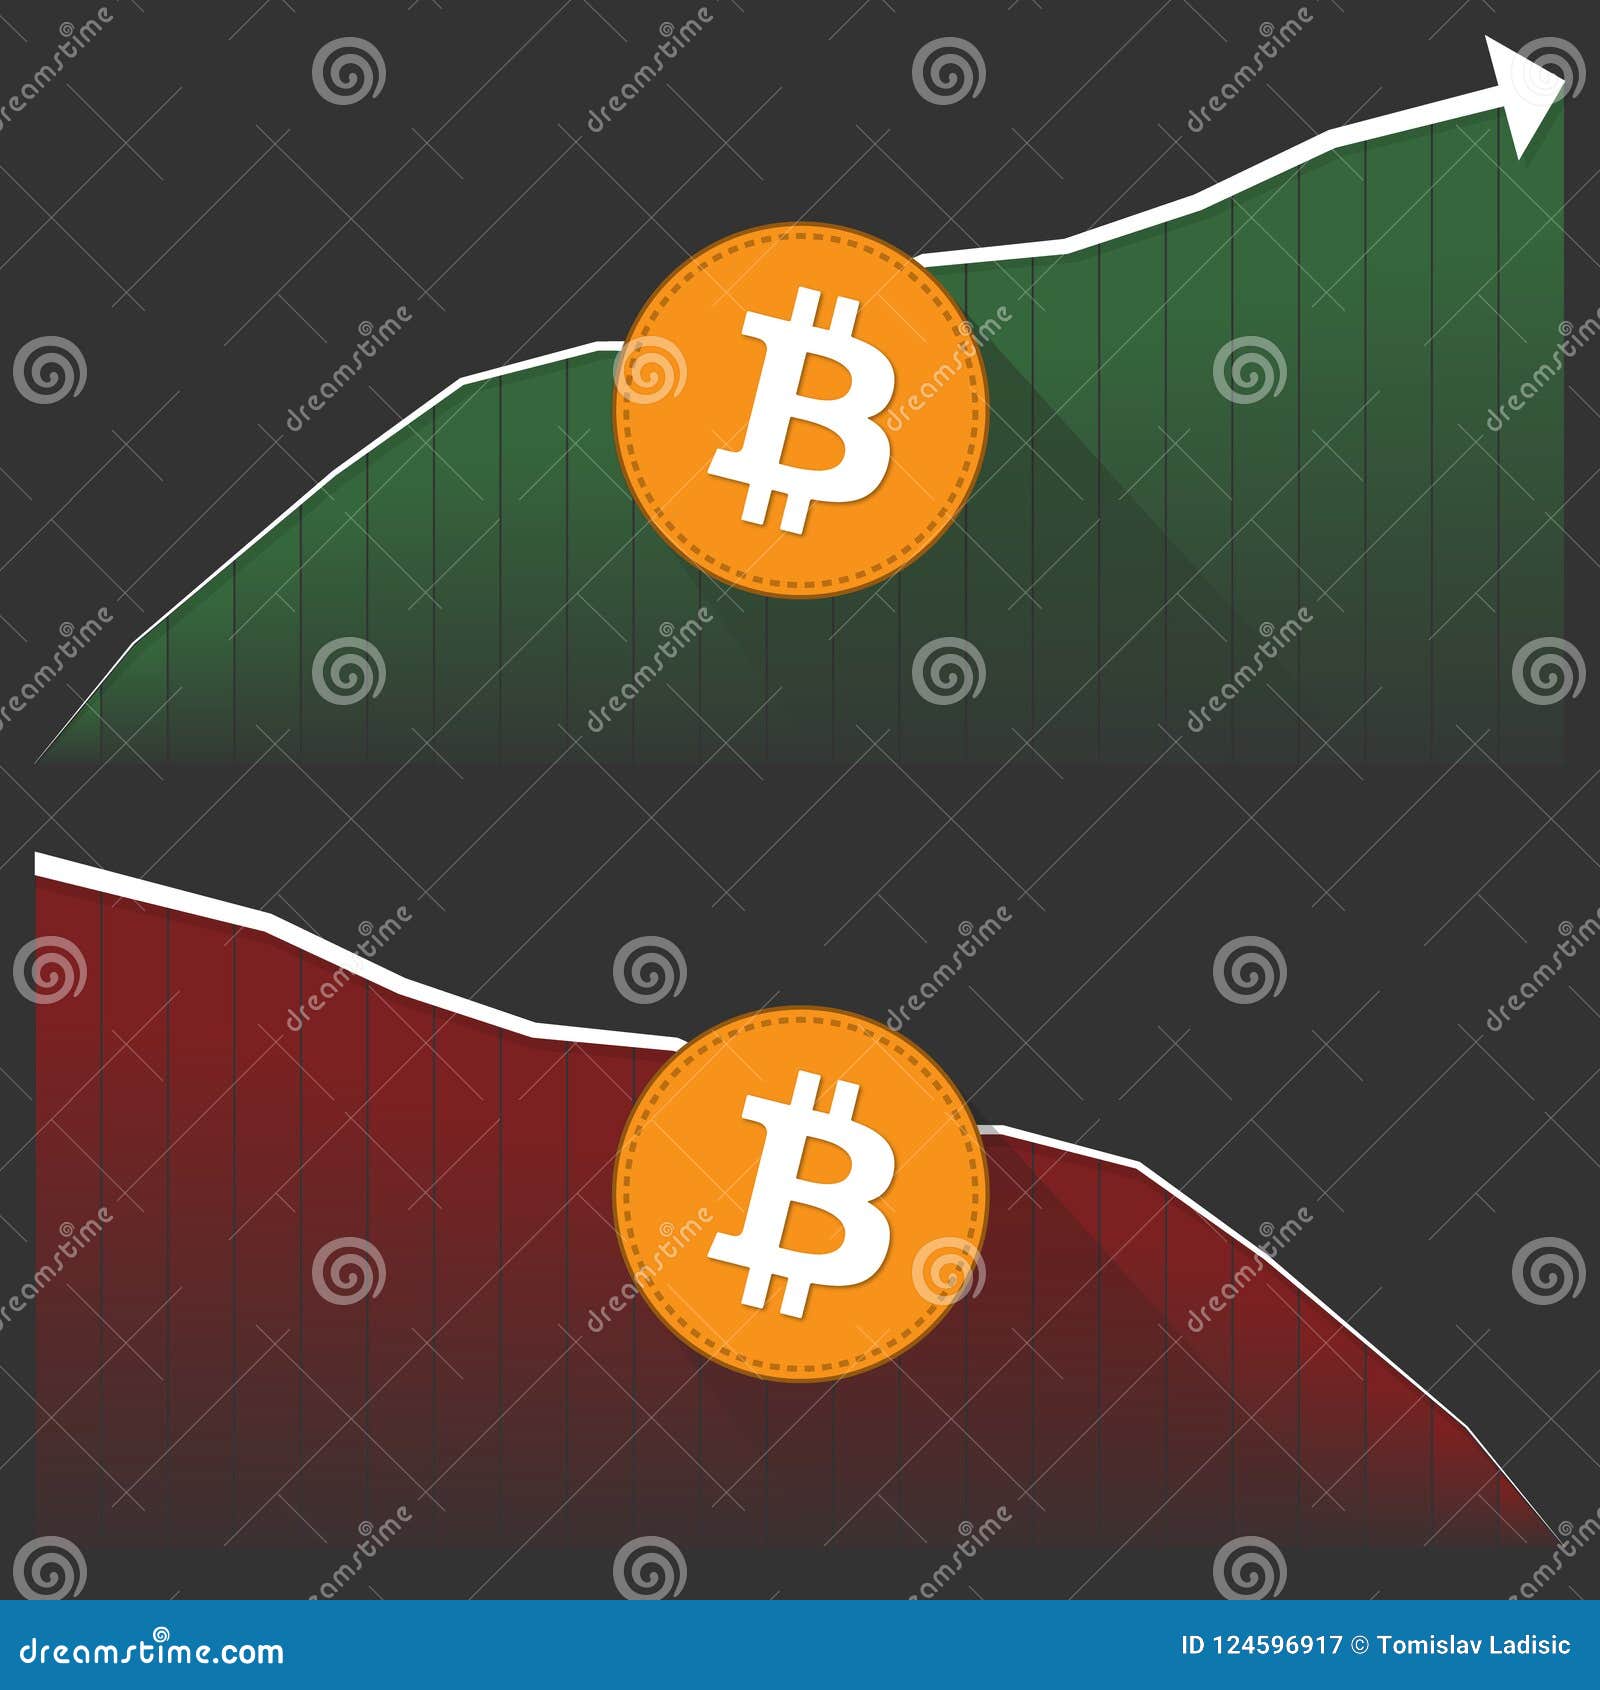 Bitcoin Cryptocurrency Price Development Stock Vector Illustration - 